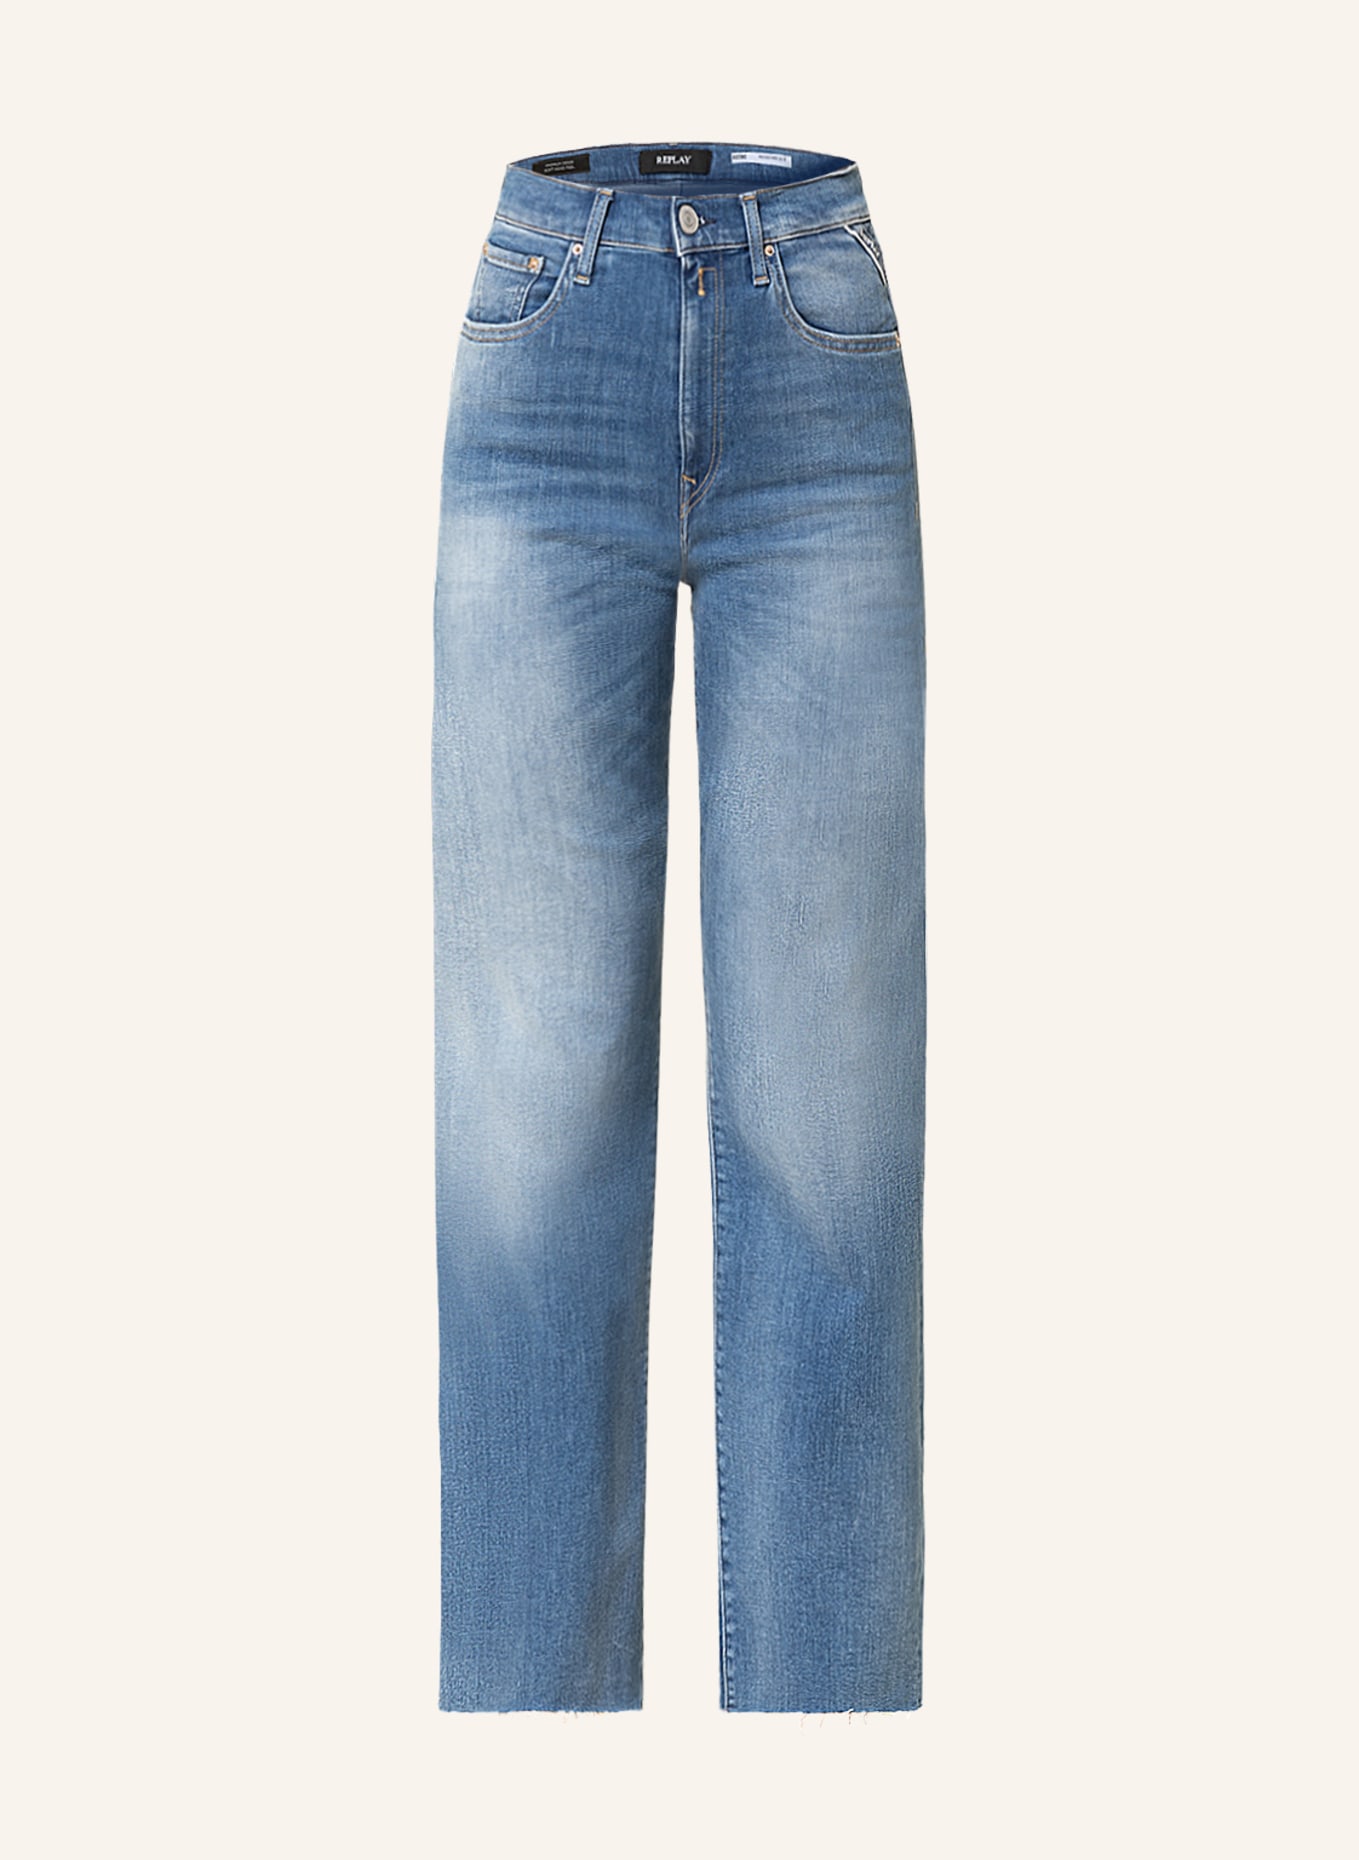 REPLAY Flared Jeans REYNE, Farbe: 009 MEDIUM BLUE (Bild 1)